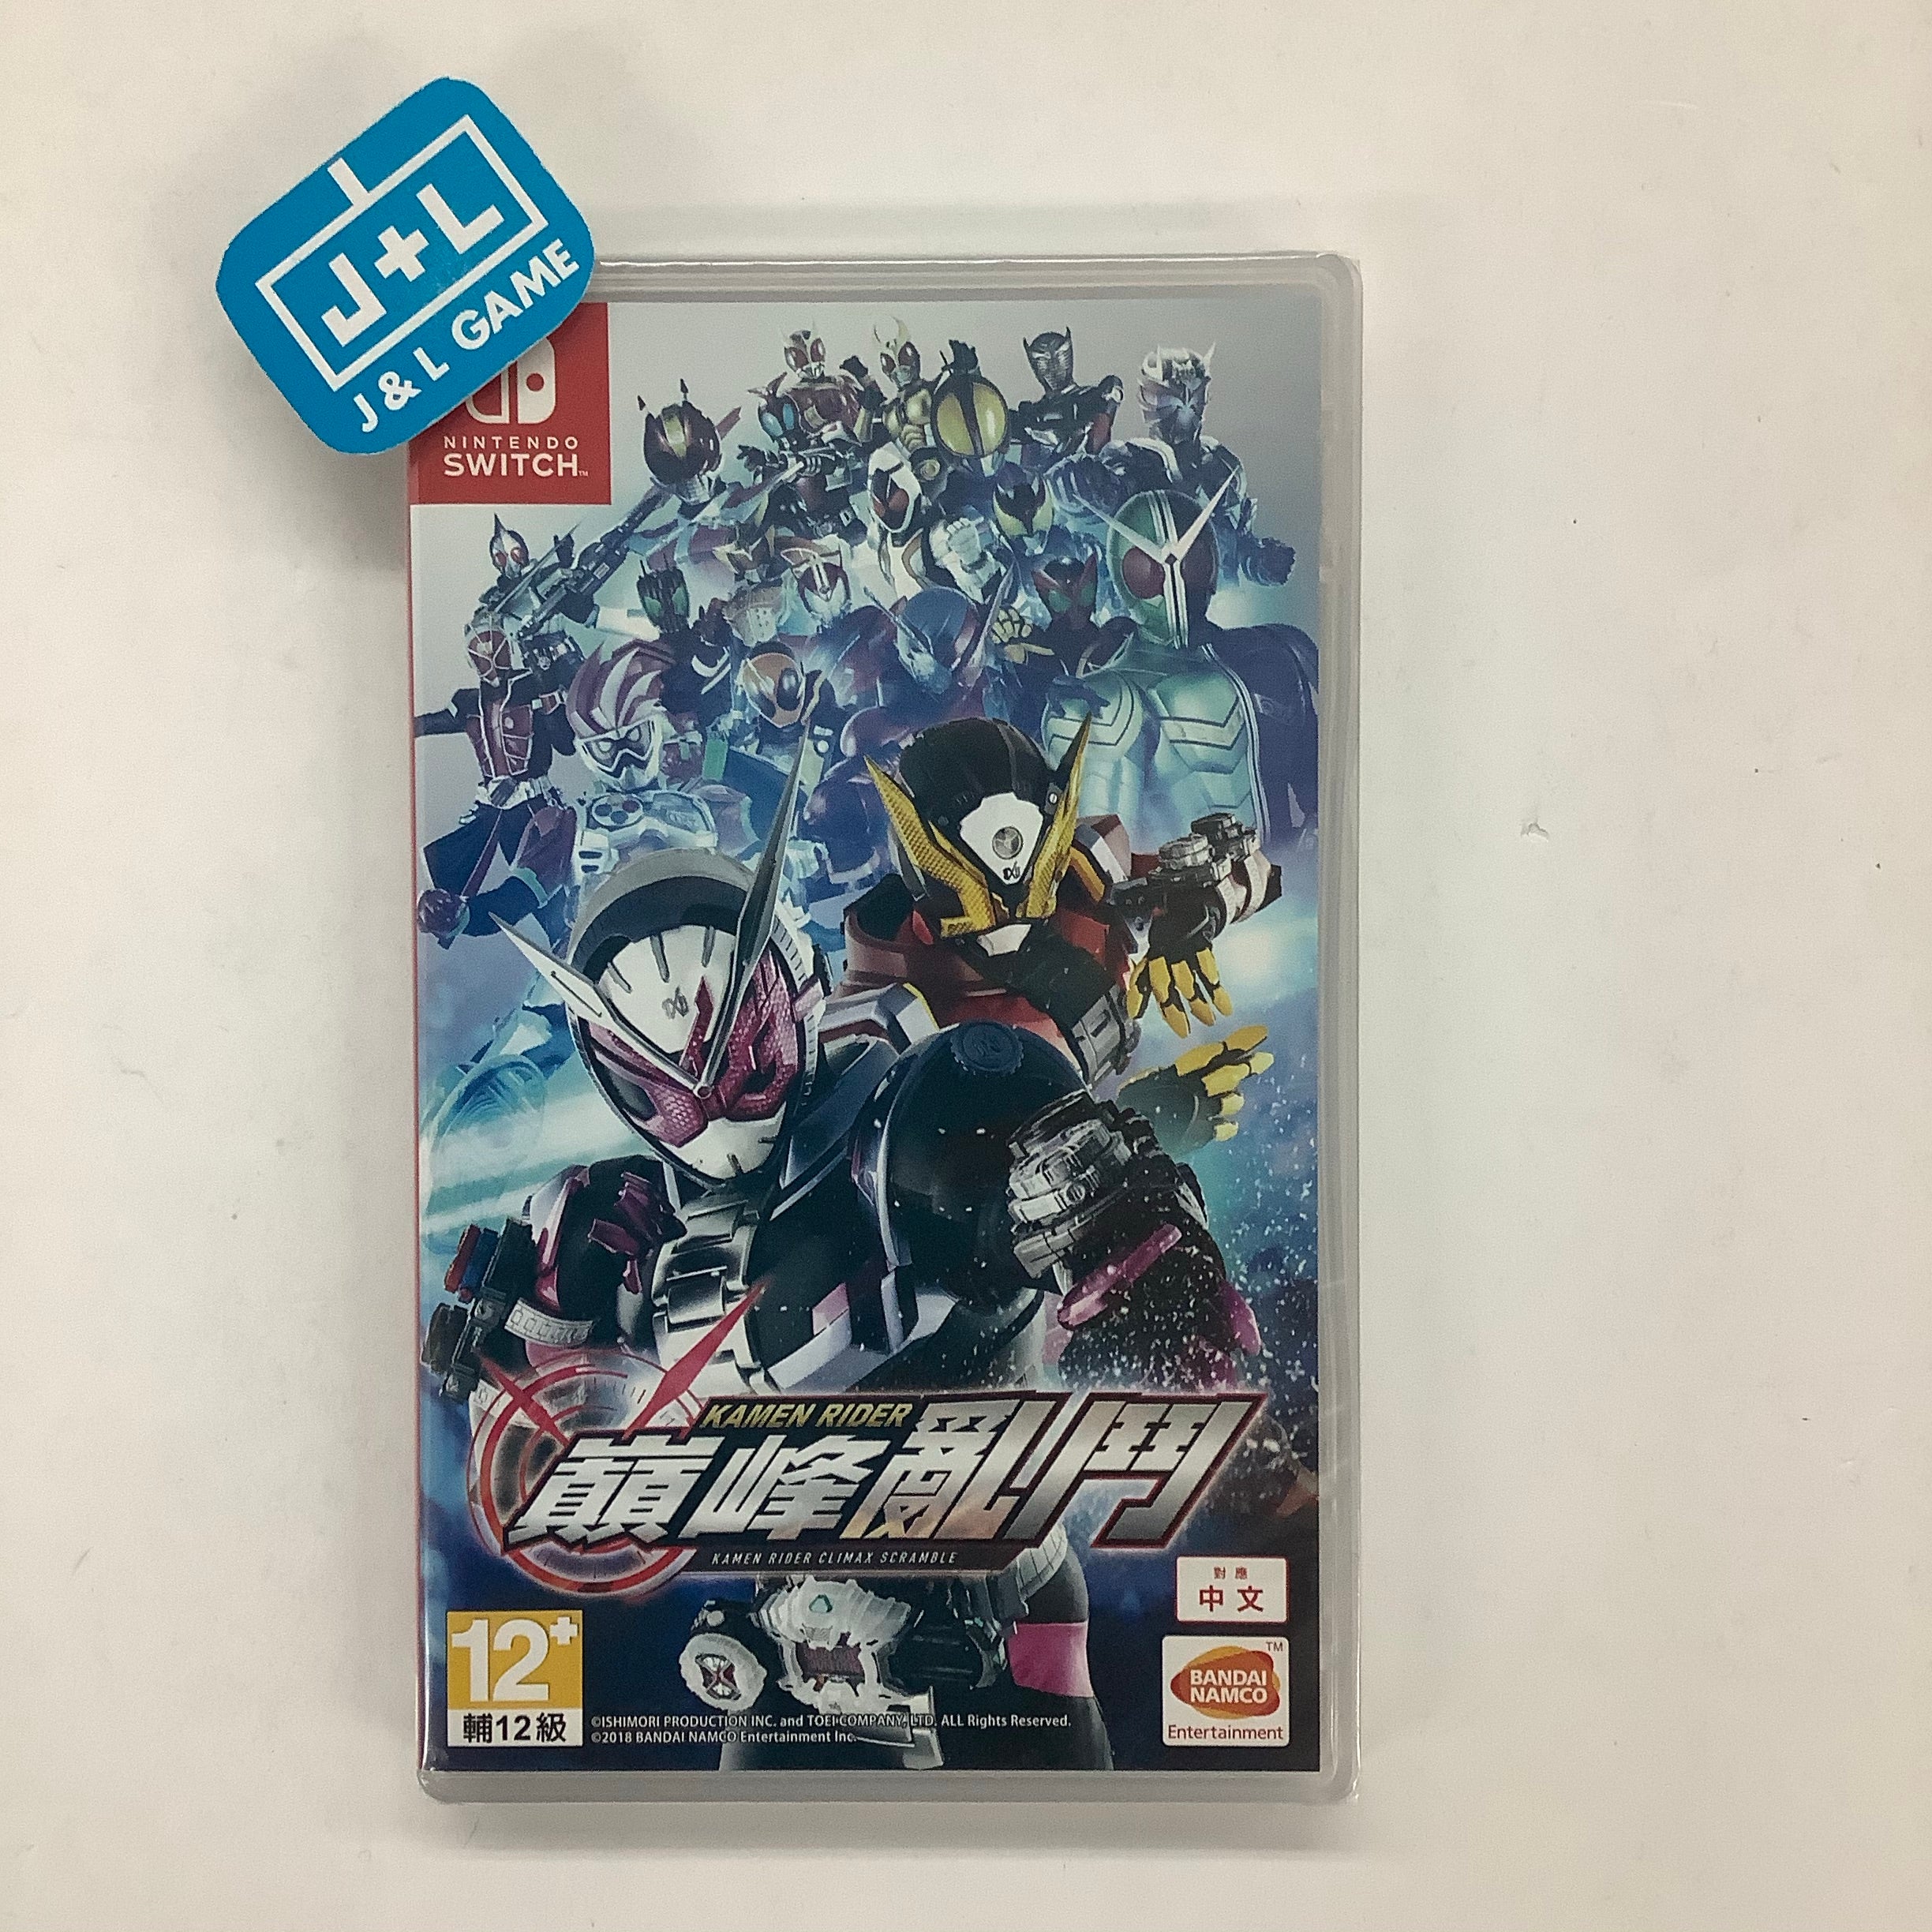 Kamen Rider Climax Scramble - (NSW) Nintendo Switch (Asia Import) Video Games Bandai Namco Games   